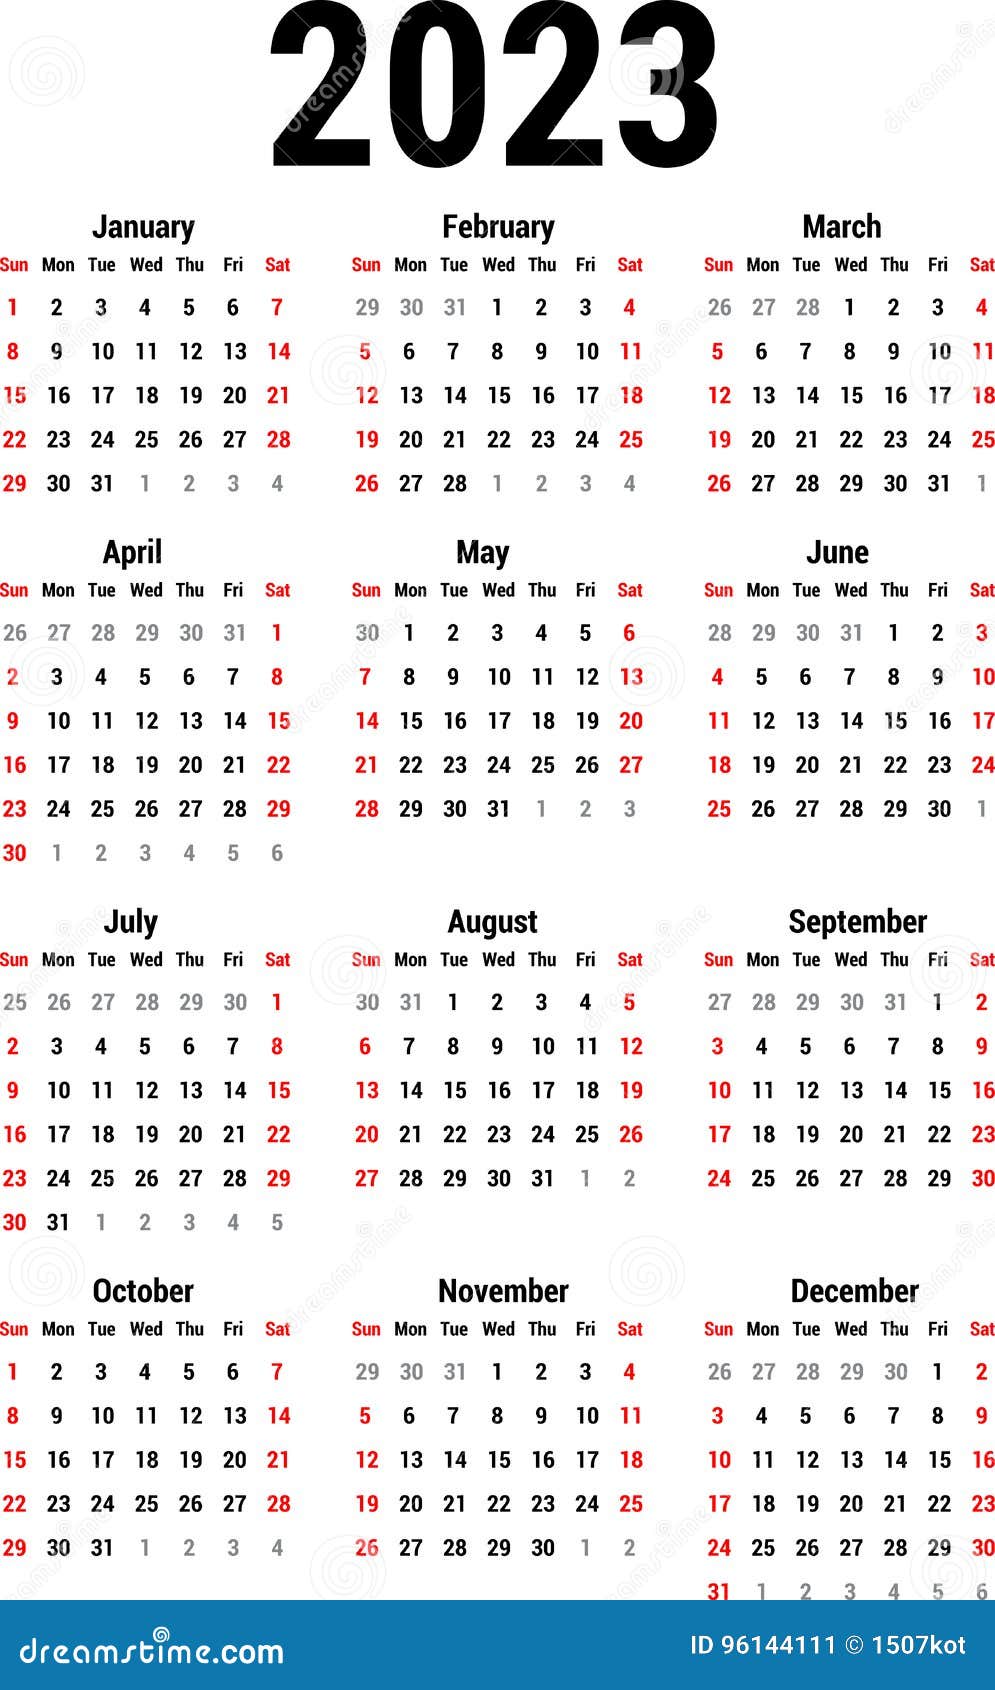 Gccs 20222023 Calendar Ny moon calendar 2022